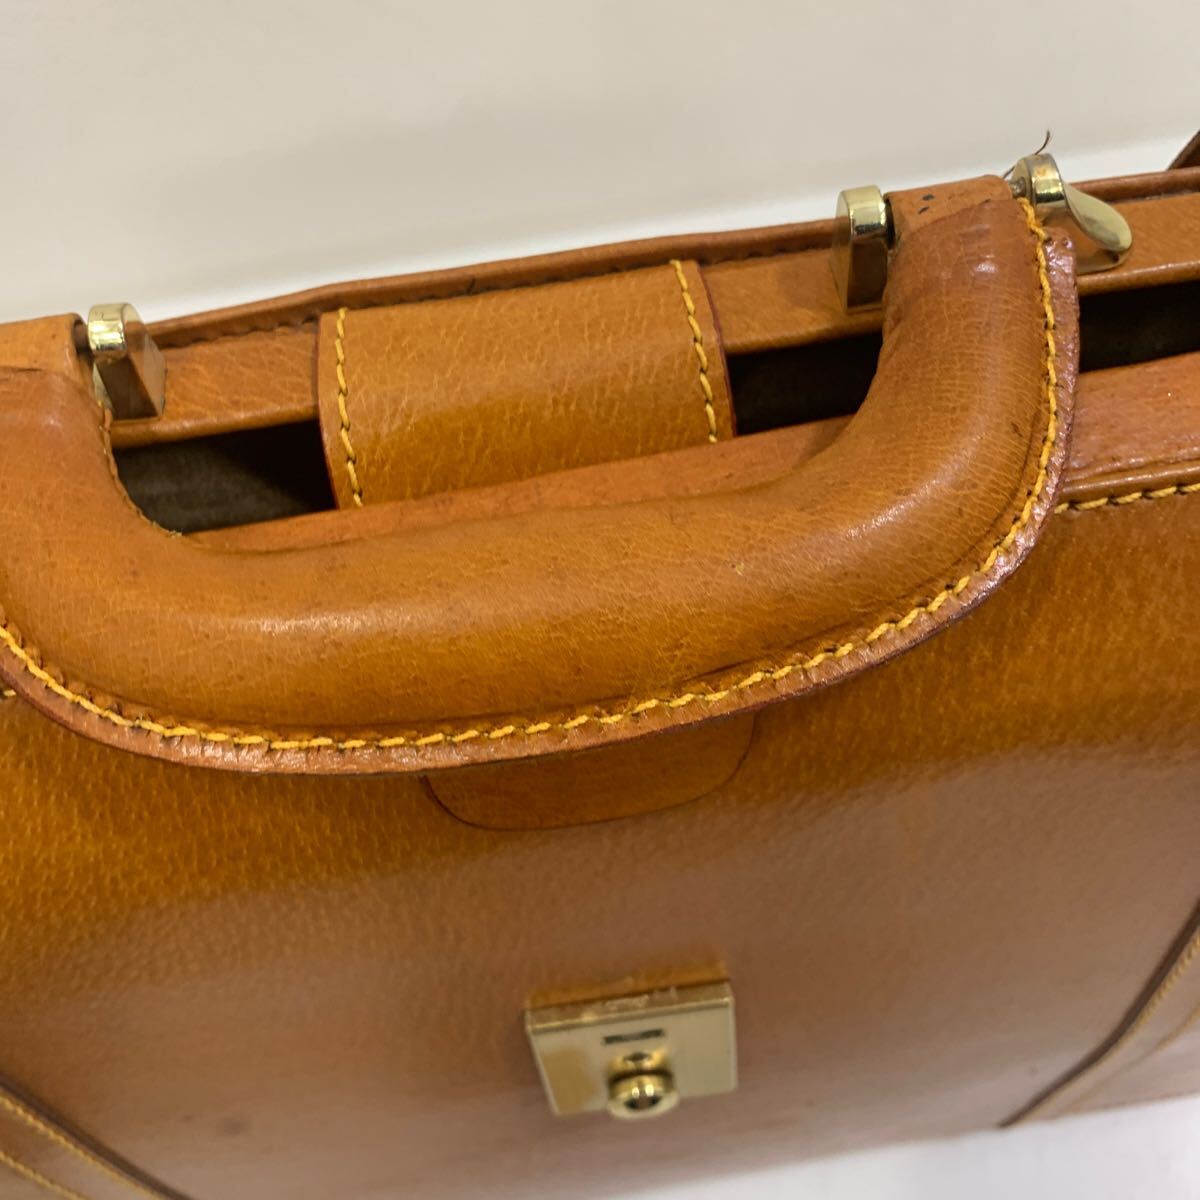  key equipped dokta- bag Boston bag Brown leather business bag leather Dulles bag business bag 